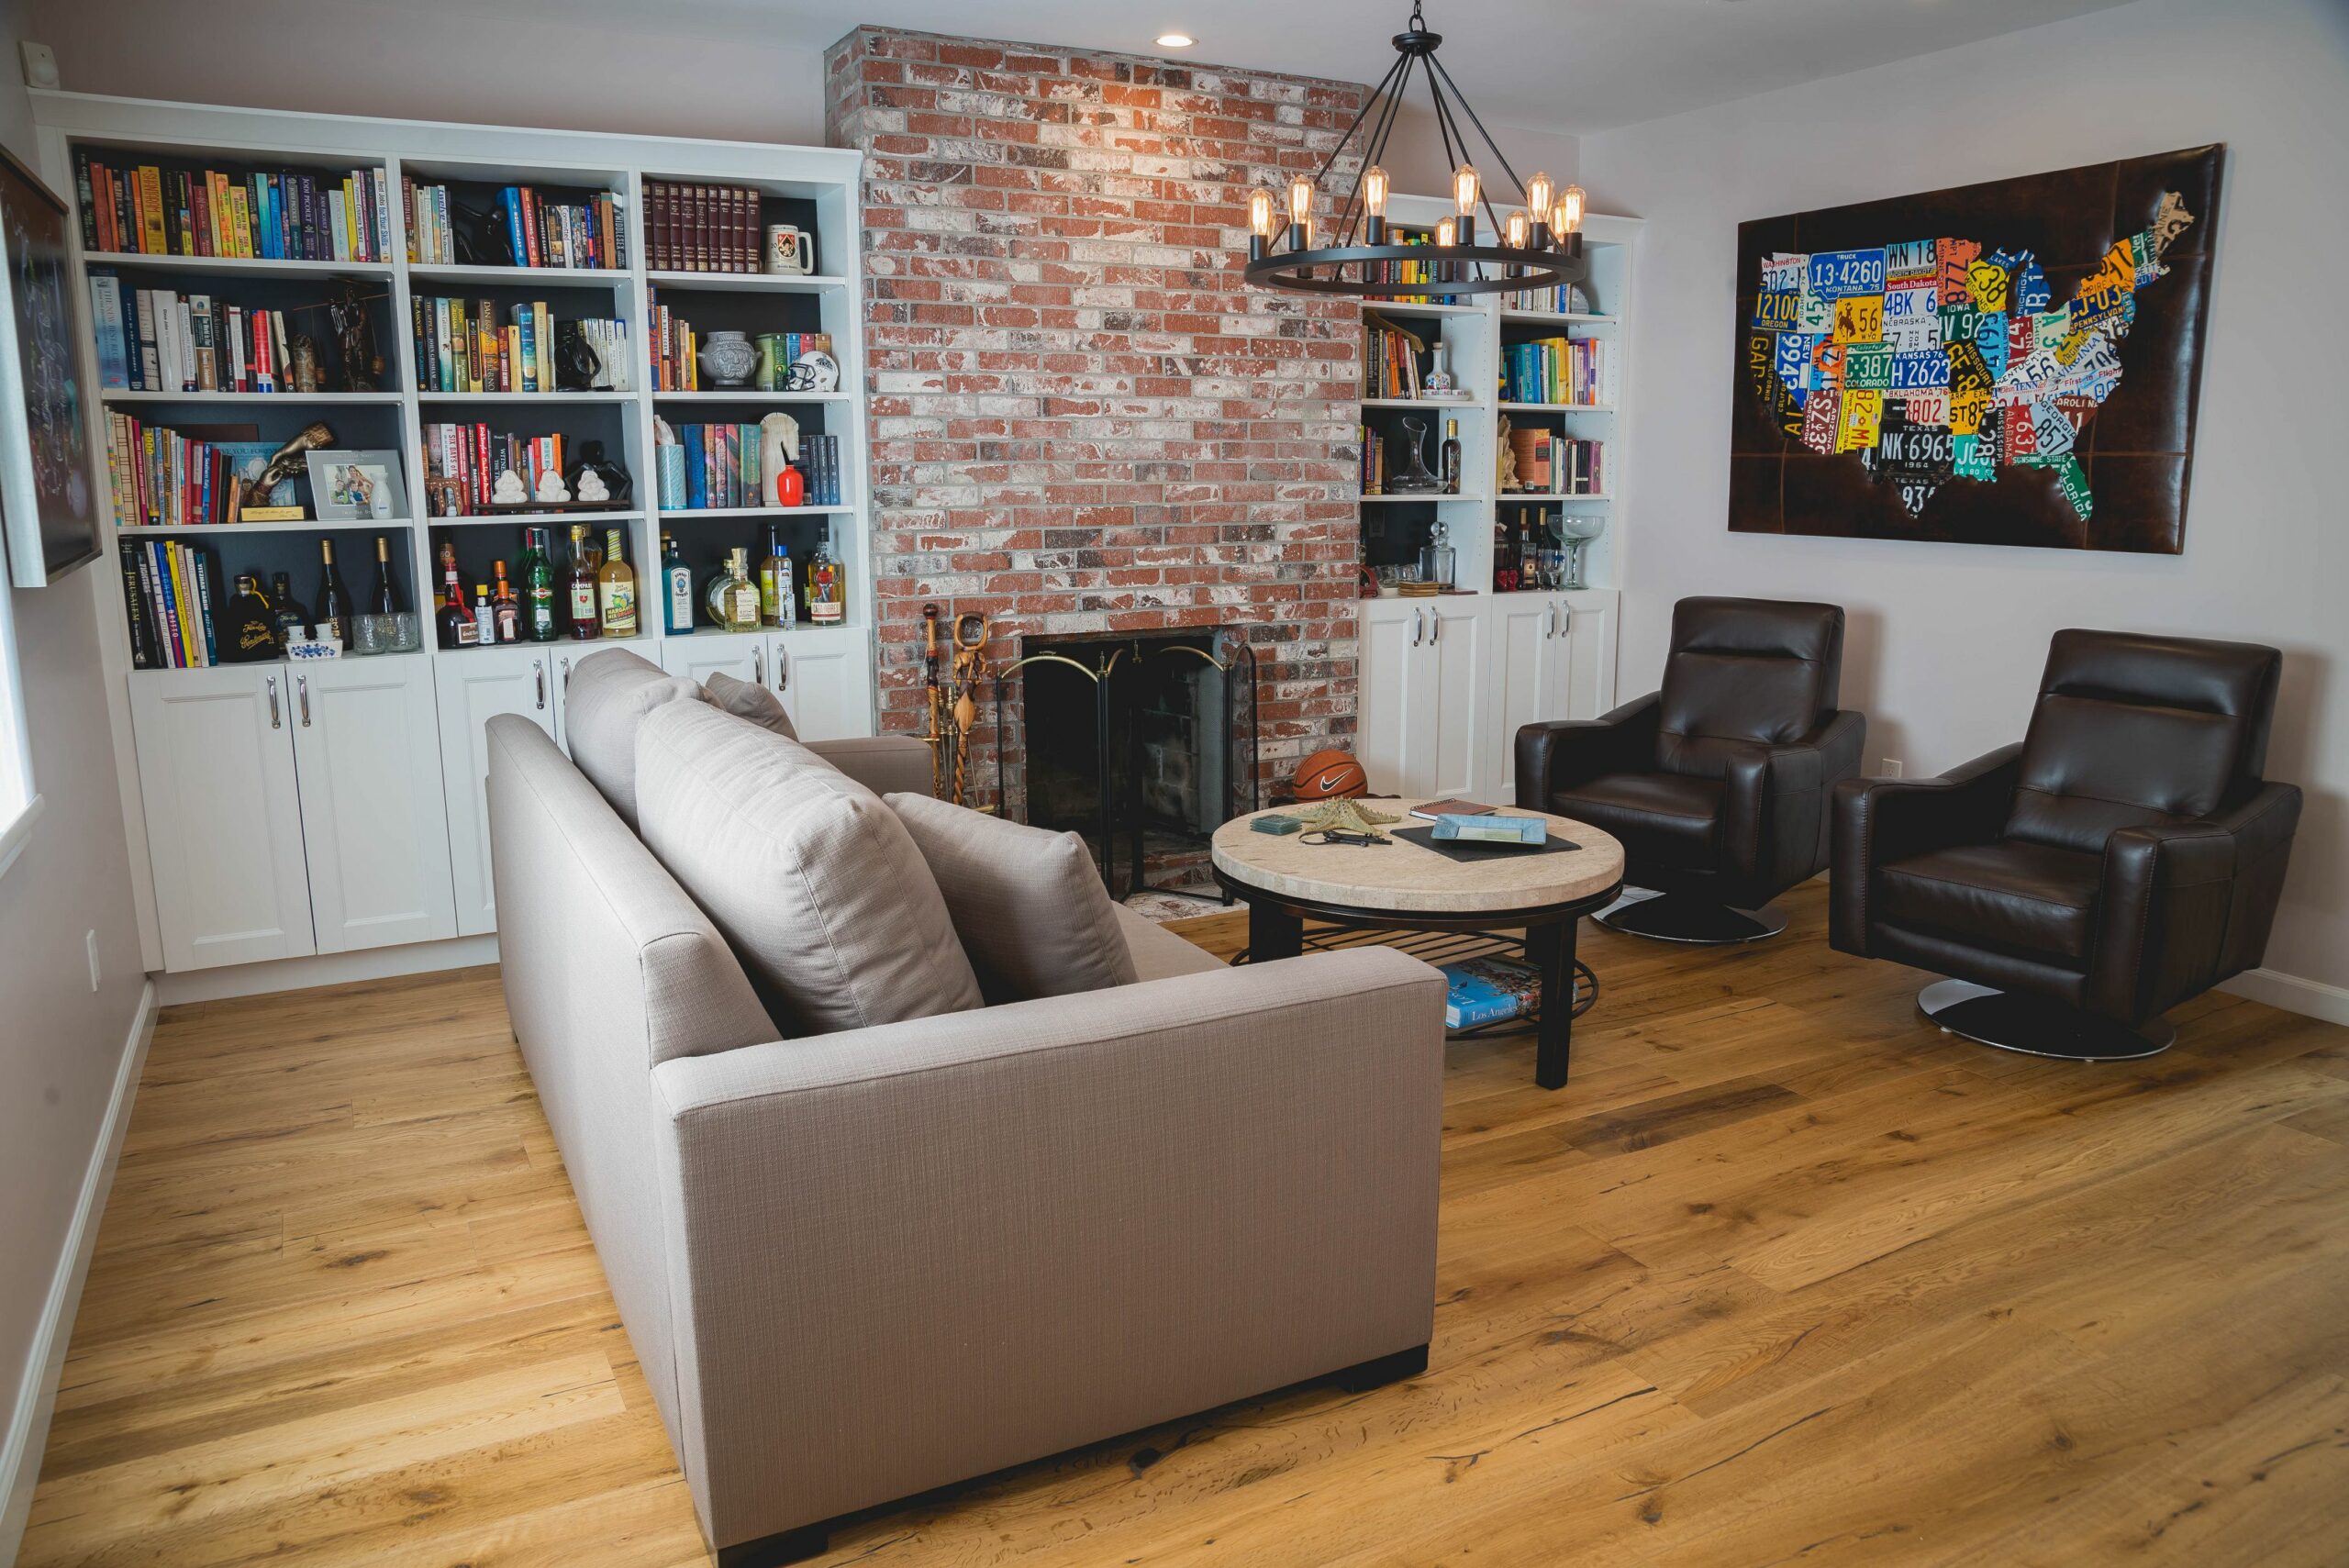 Cozy living room with brick wall and bookshelf decor.